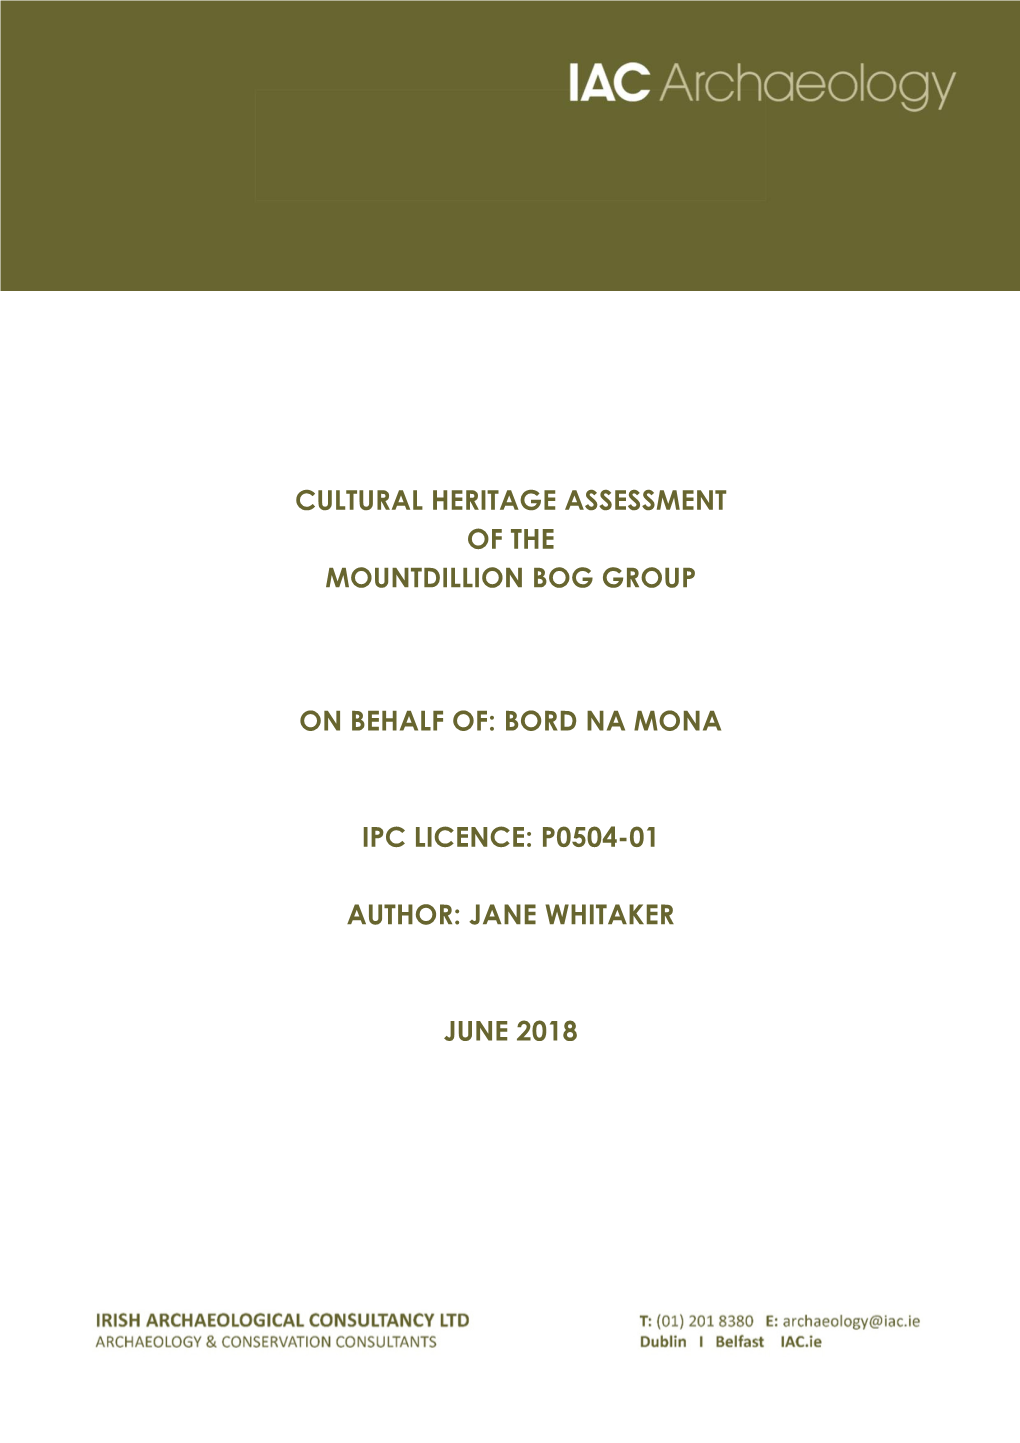 Cultural Heritage Assessment of the Mountdillion Bog Group